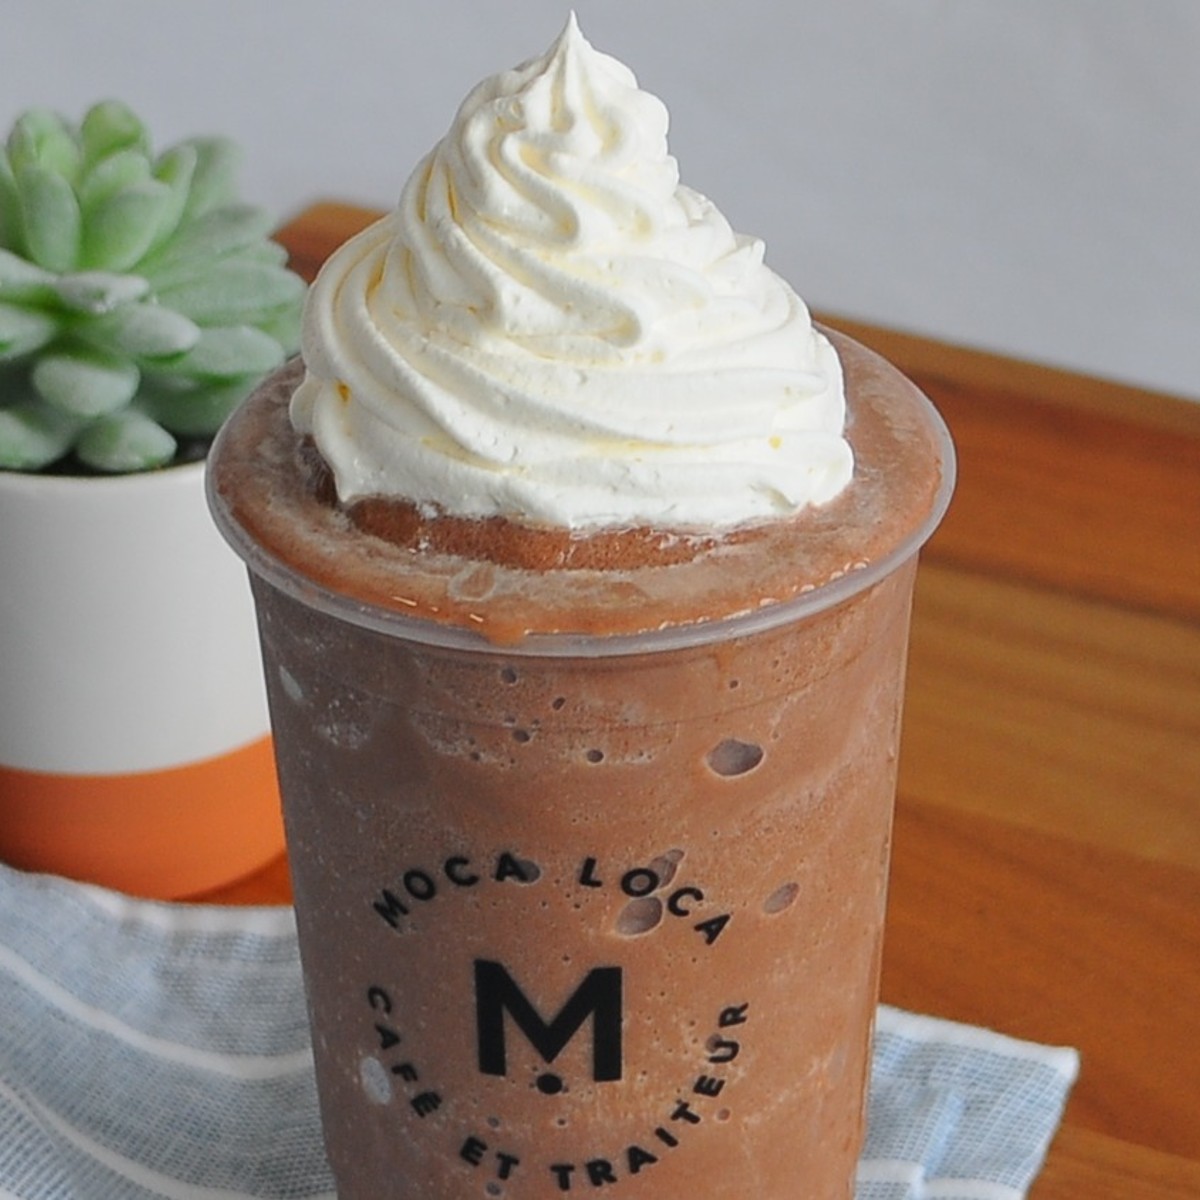 Sirop vanille sans sucre – Moca Loca Cafe